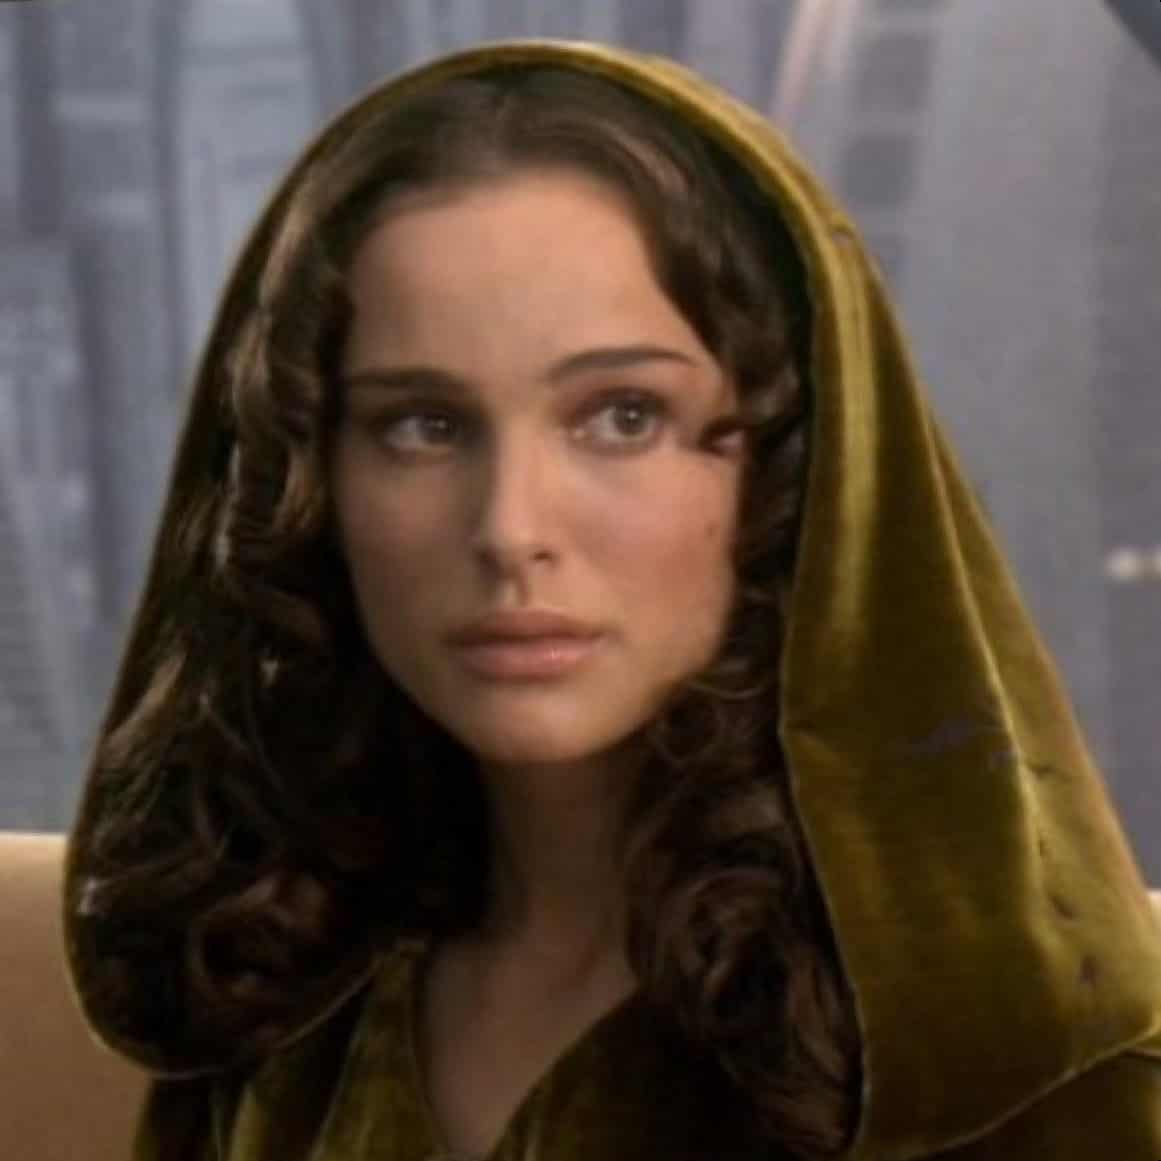 Natalie Portman as Padmé Amidala in "Star Wars"